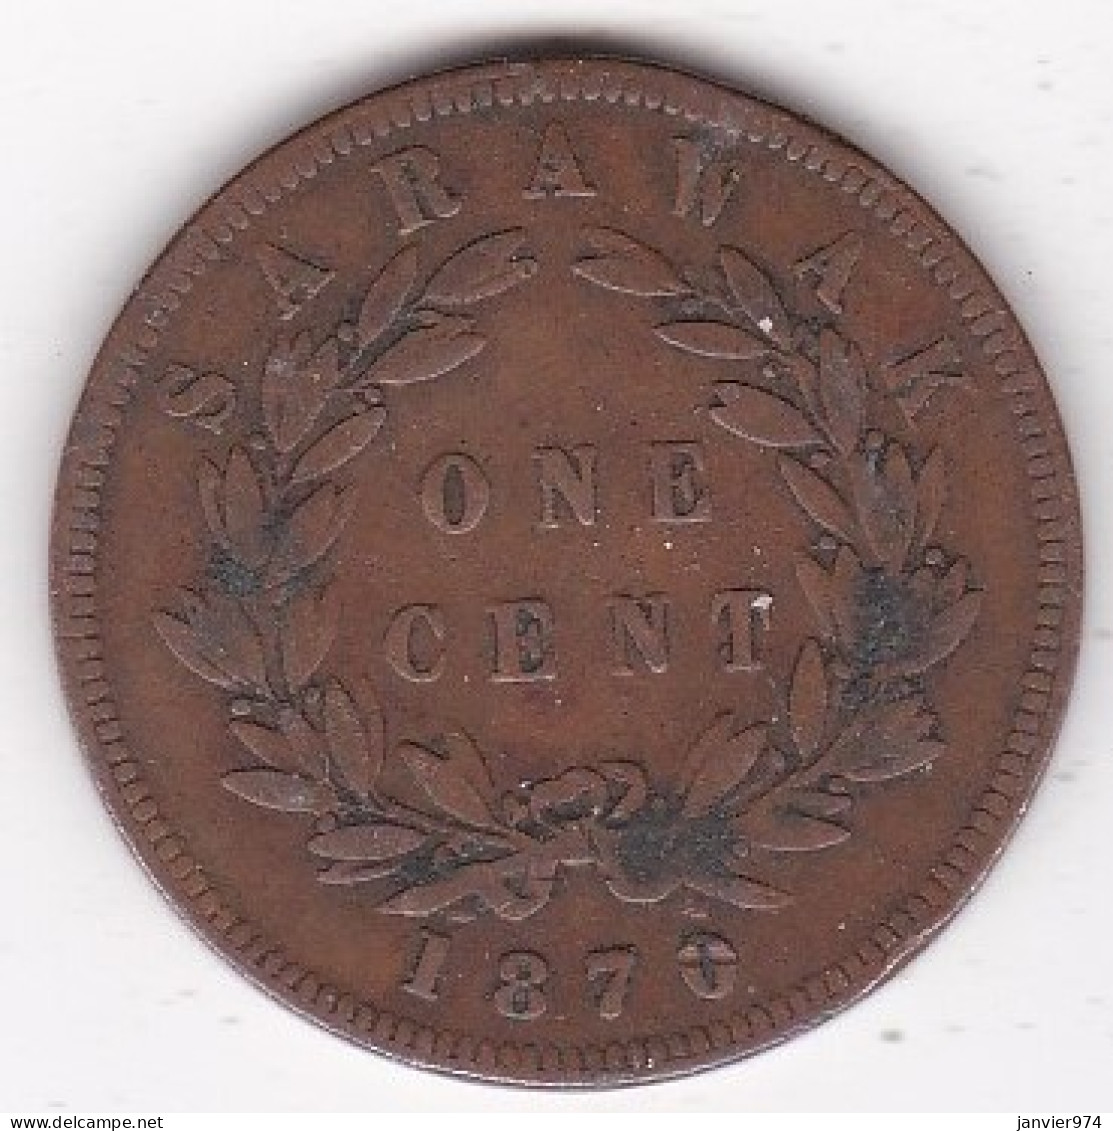 Sarawak . One Cent 1870 . C. BROOKE RAJAH. KM# 6 - Malaysie